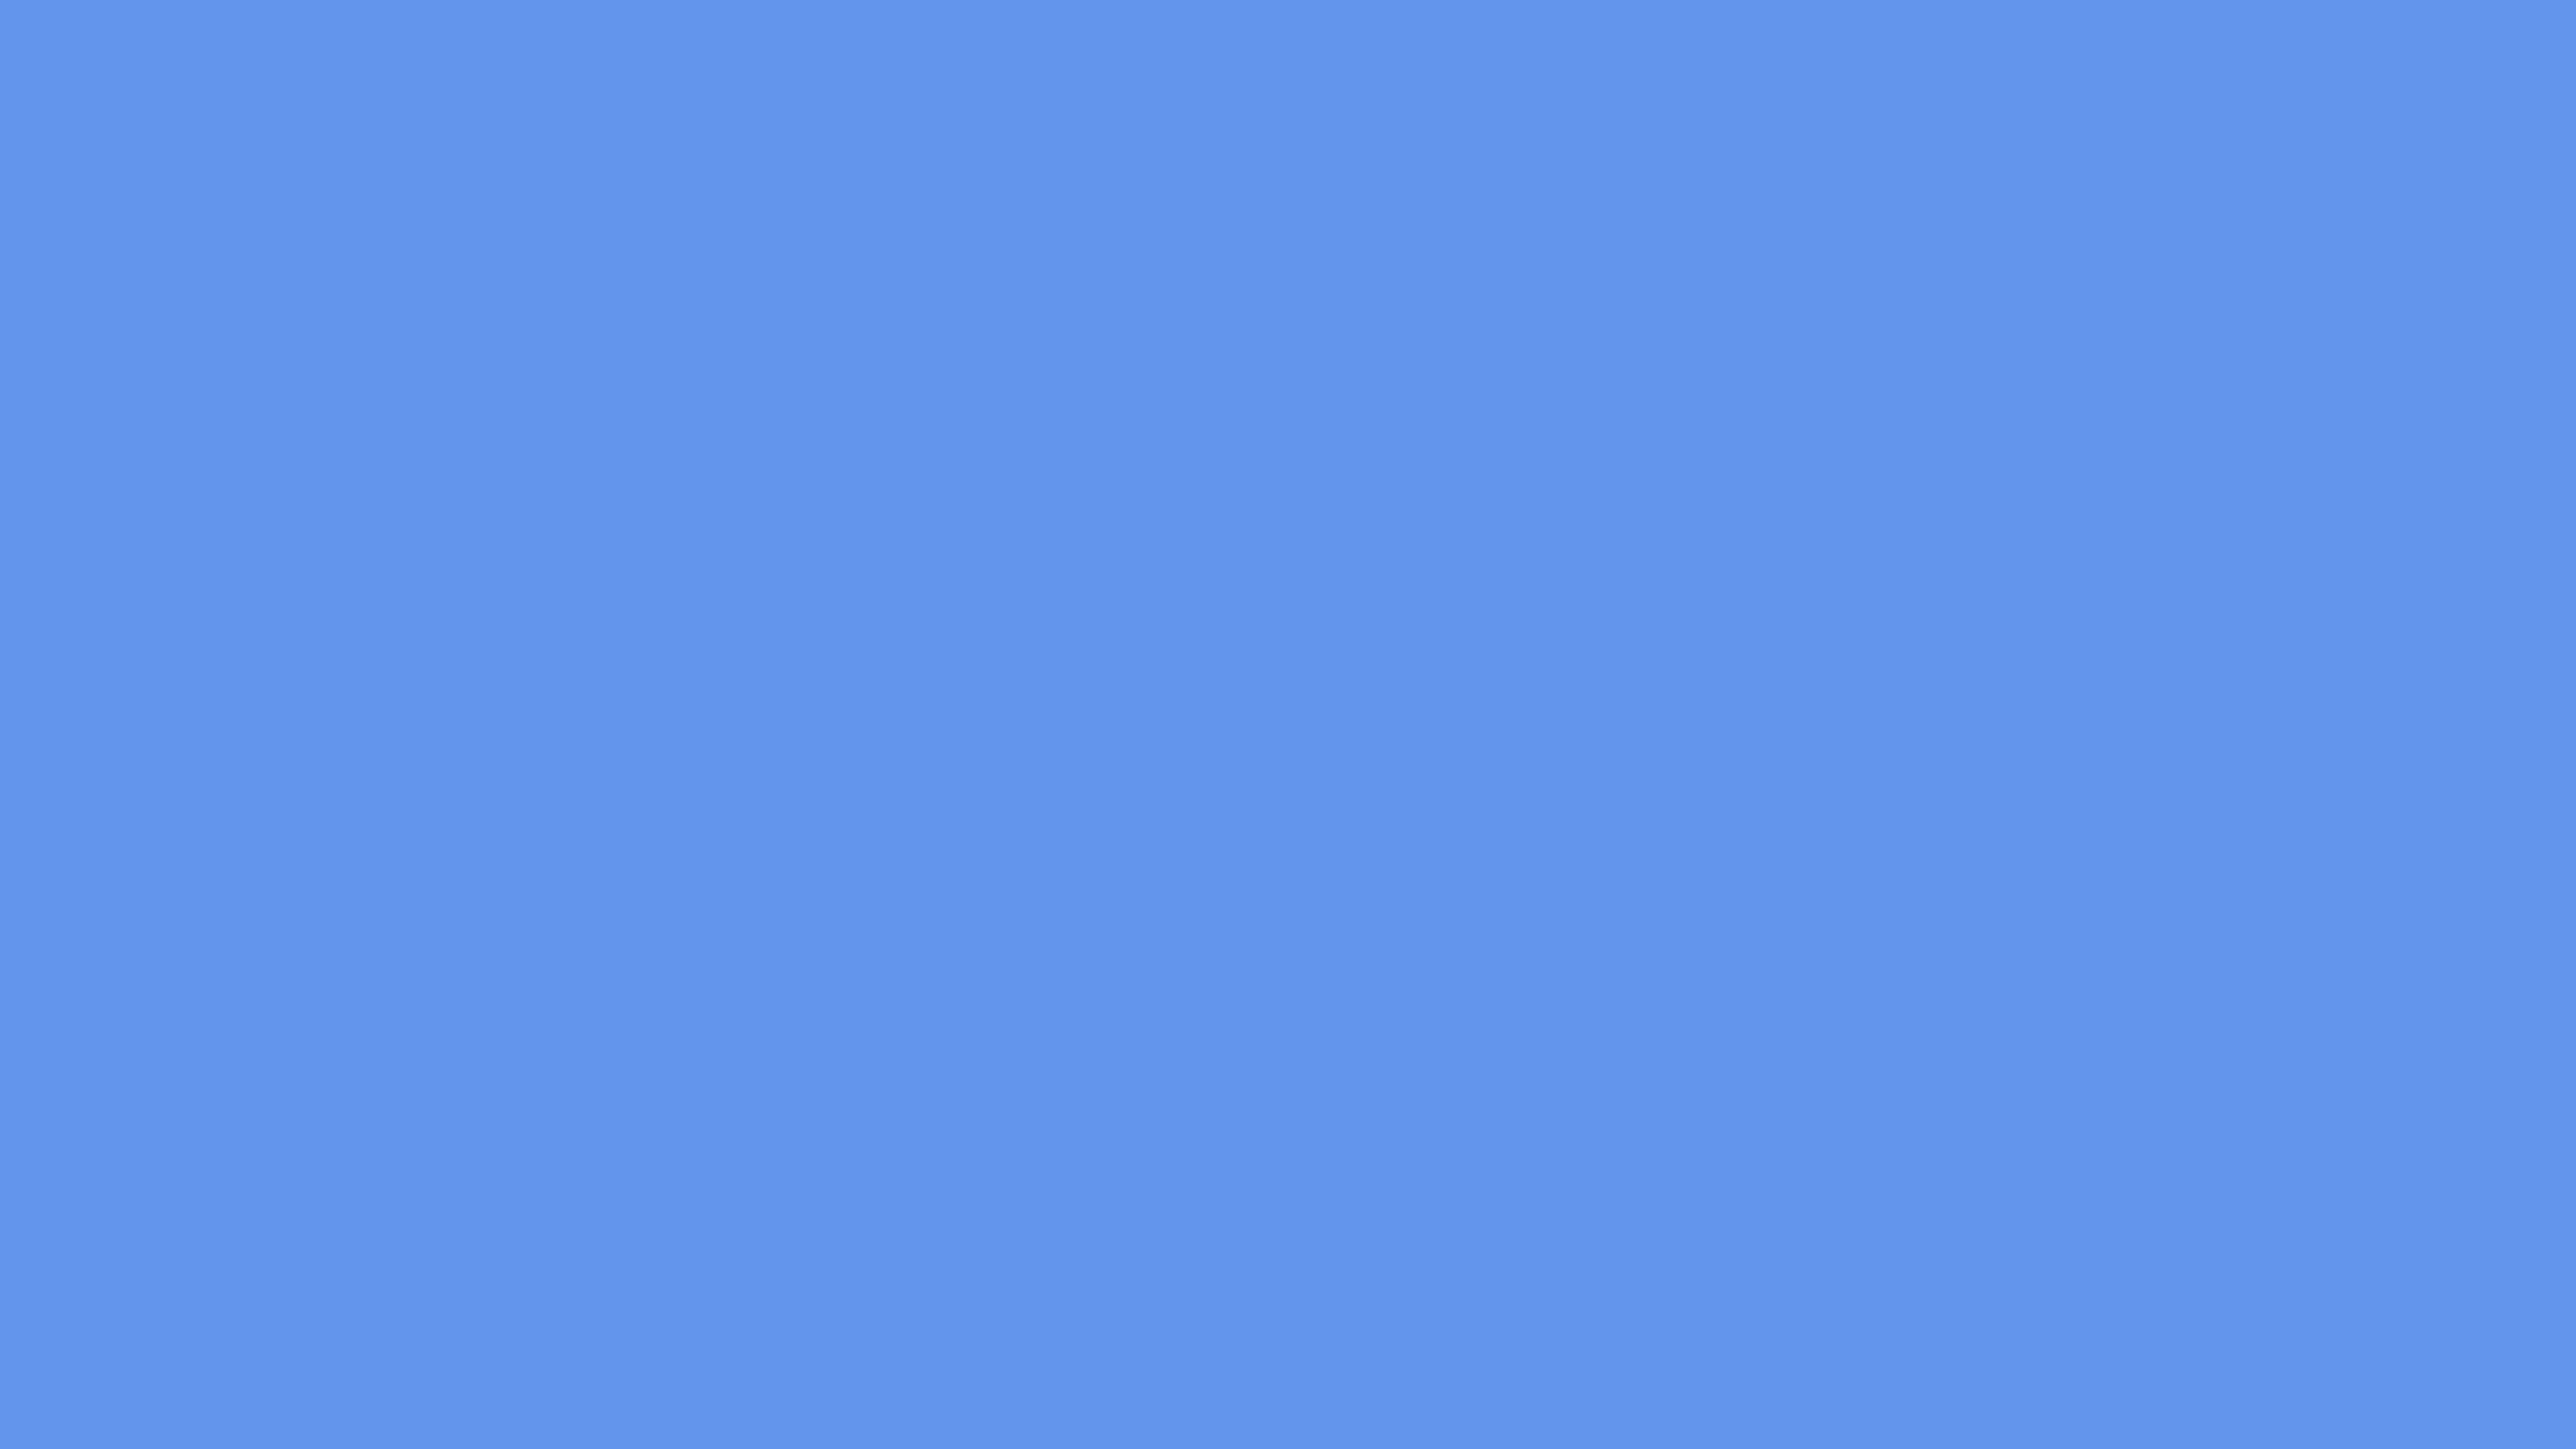 7680x4320 Cornflower Blue Solid Color Background